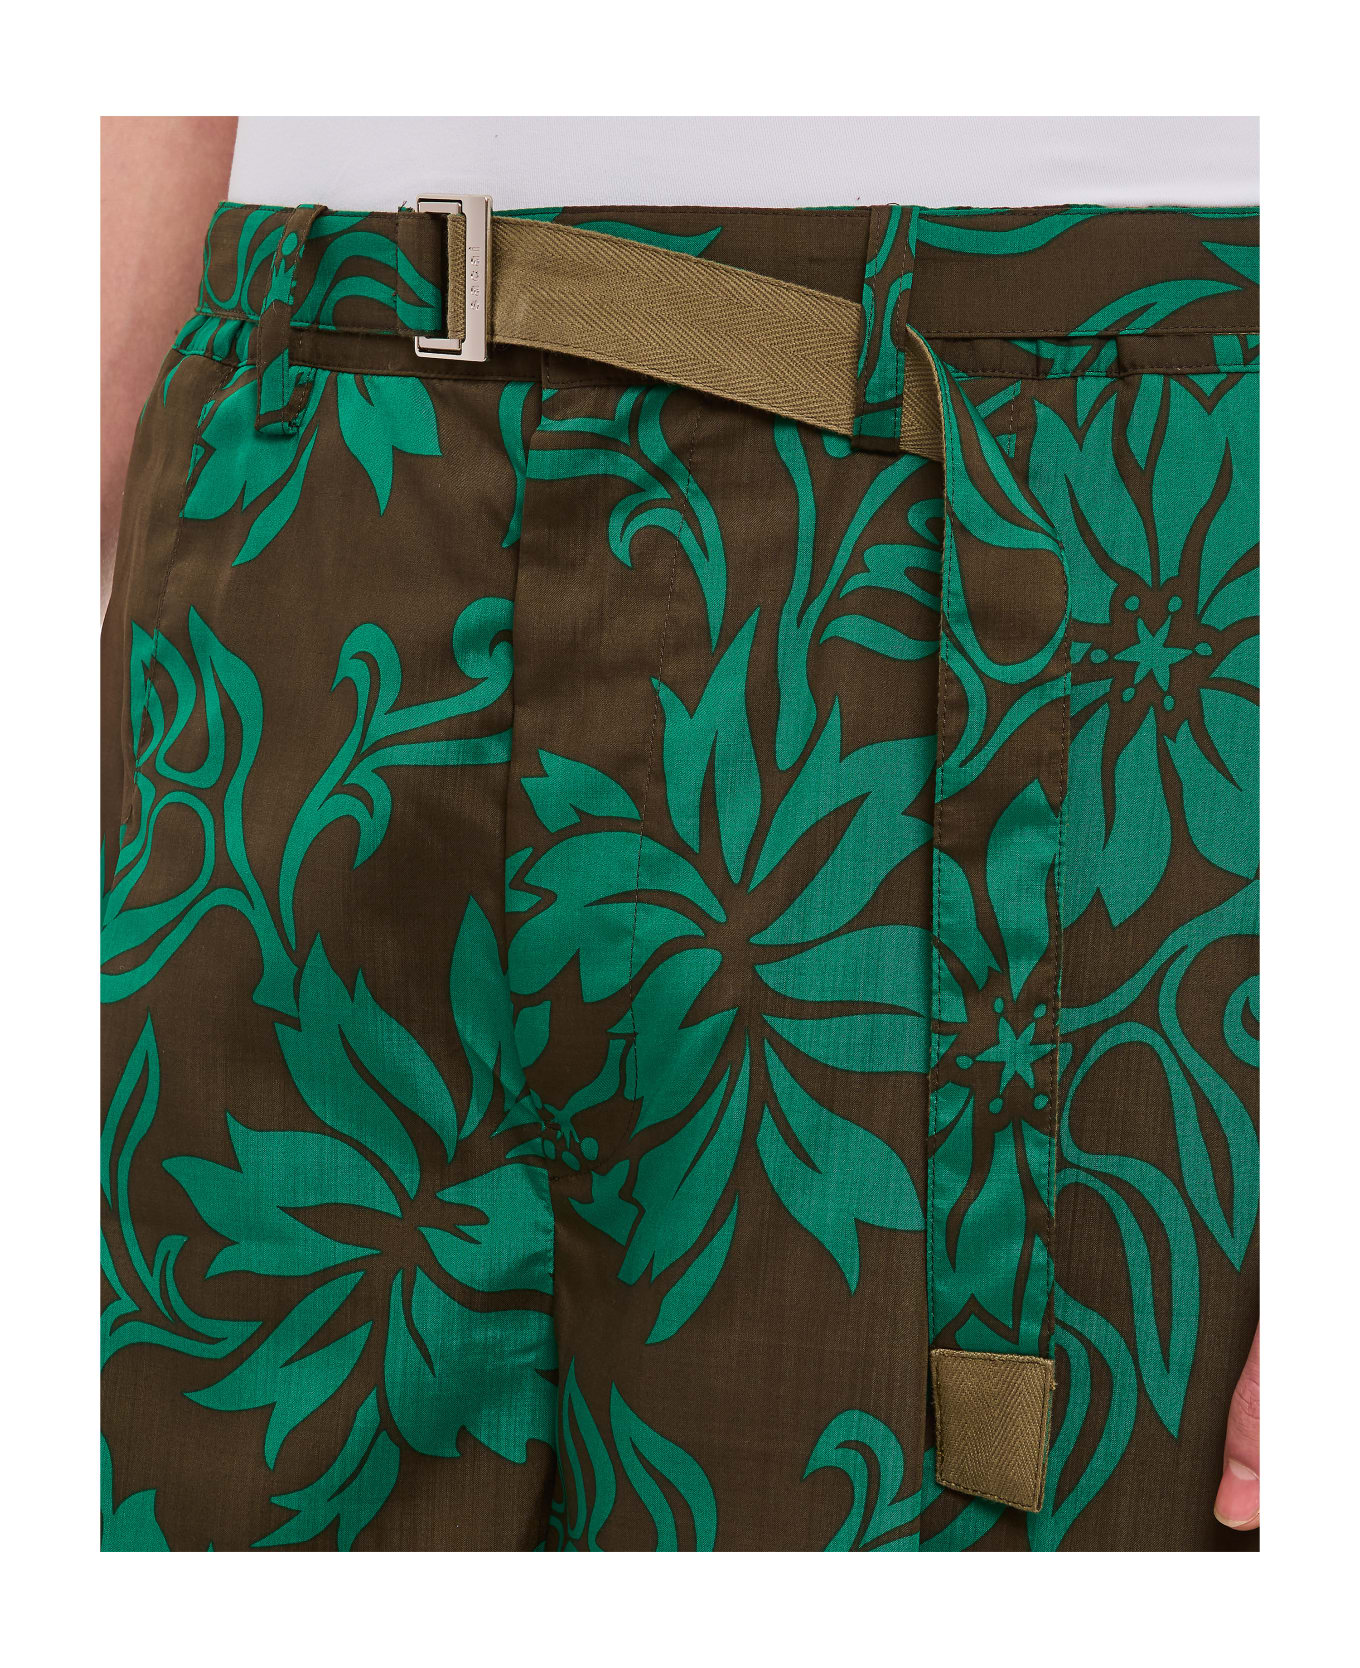 Sacai Floral Print Shorts - Green